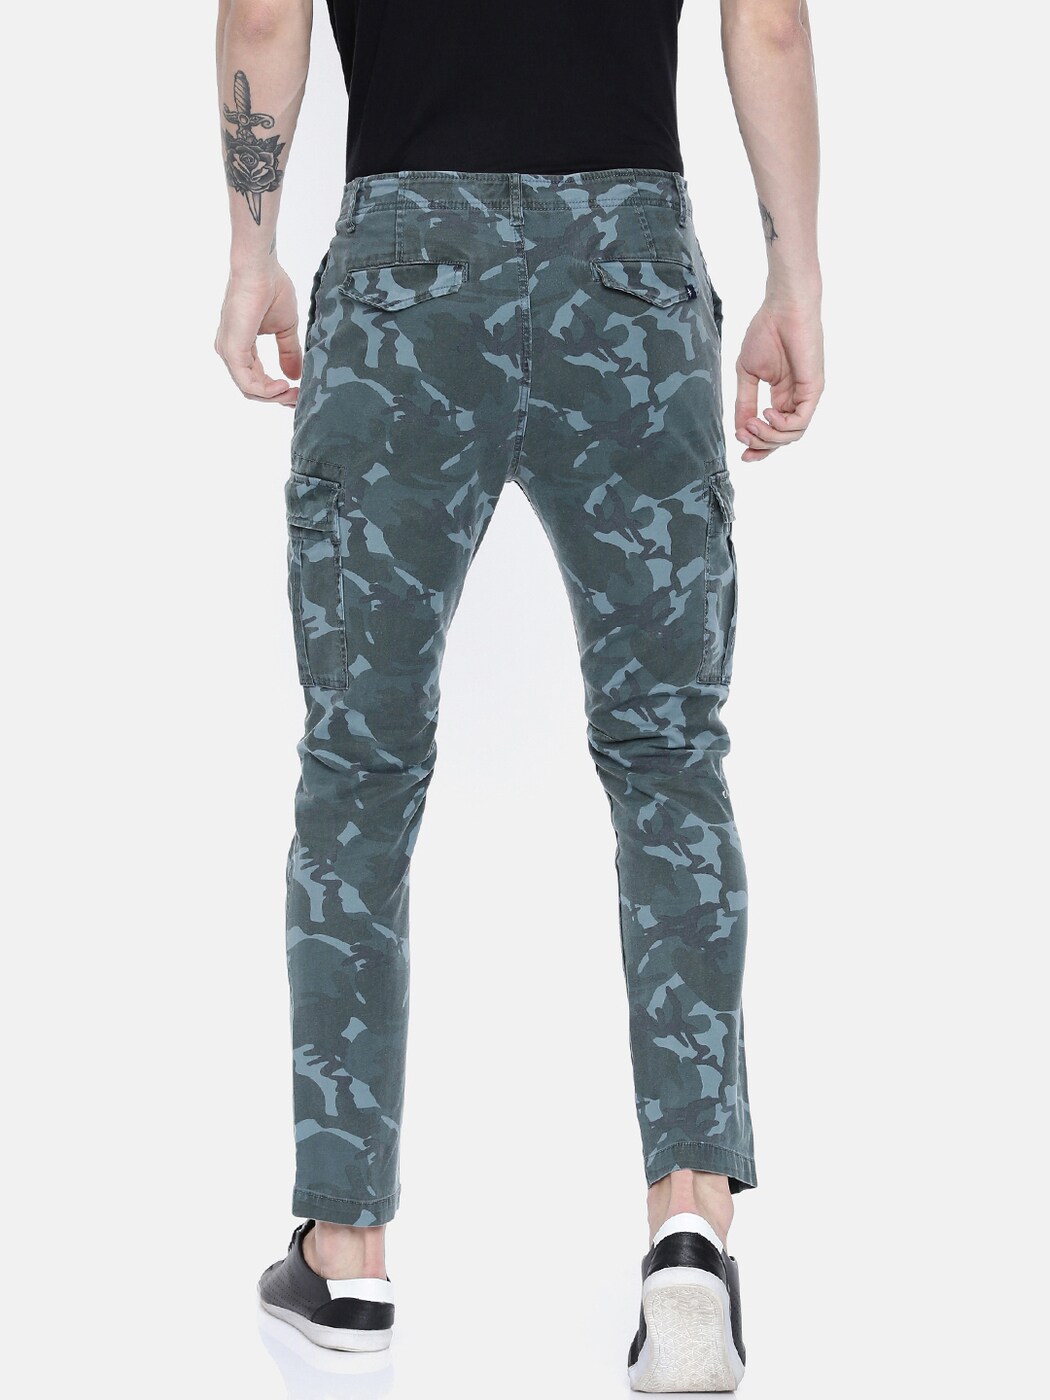 Cargo Pants For Men  Buy Latest Trendy Cargo Pants Online  Myntra